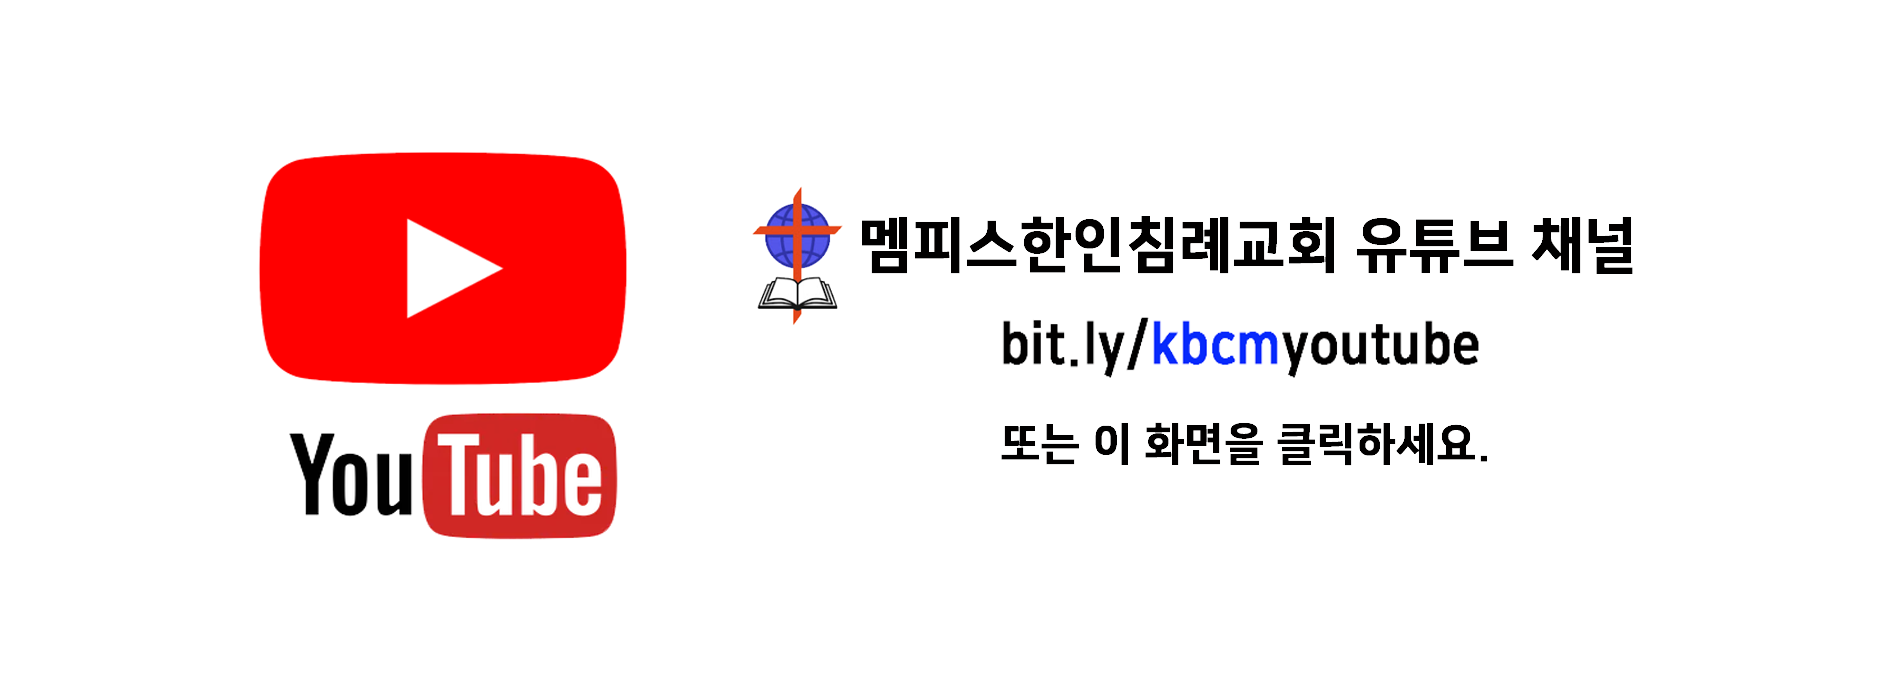 KBCM Youtube Channel